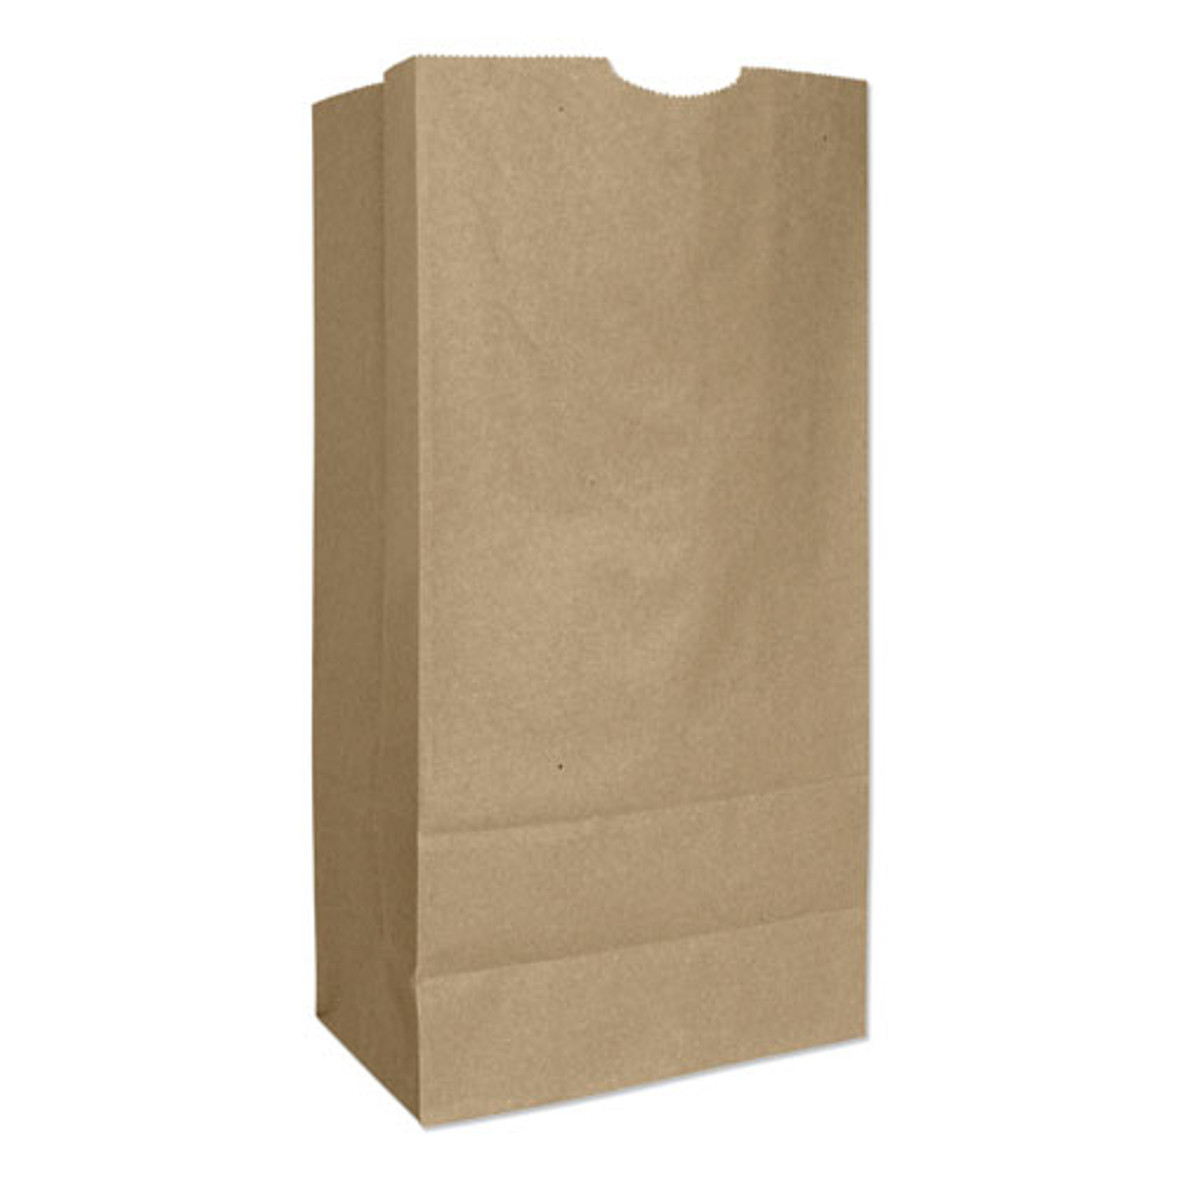 Grocery Paper Bags, 57 Lbs Capacity, #16, 7.75"w X 4.81"d X 16"h, Kraft, 500 Bags